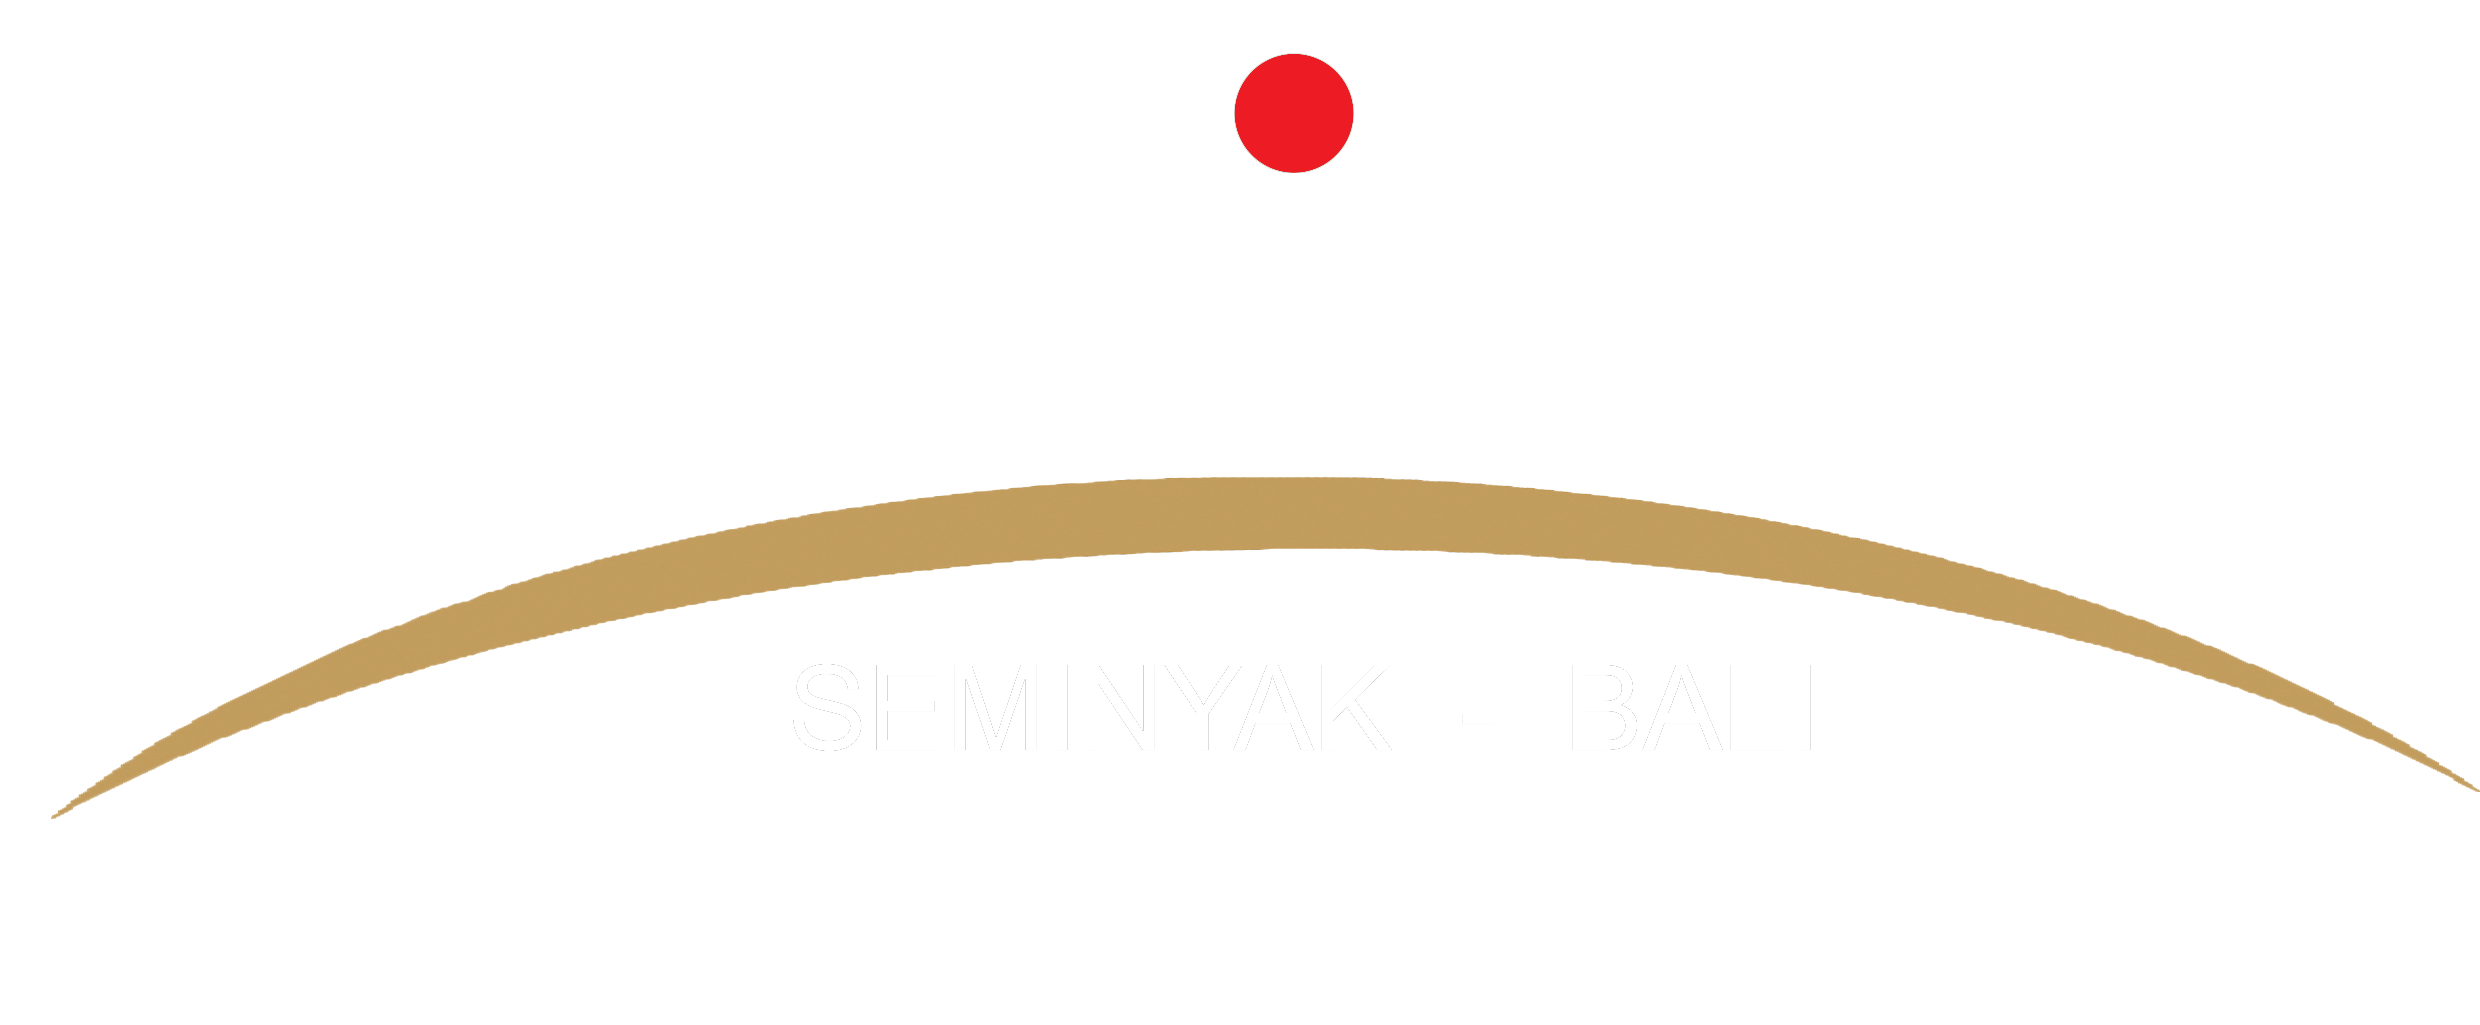 horison-seminyak-logo